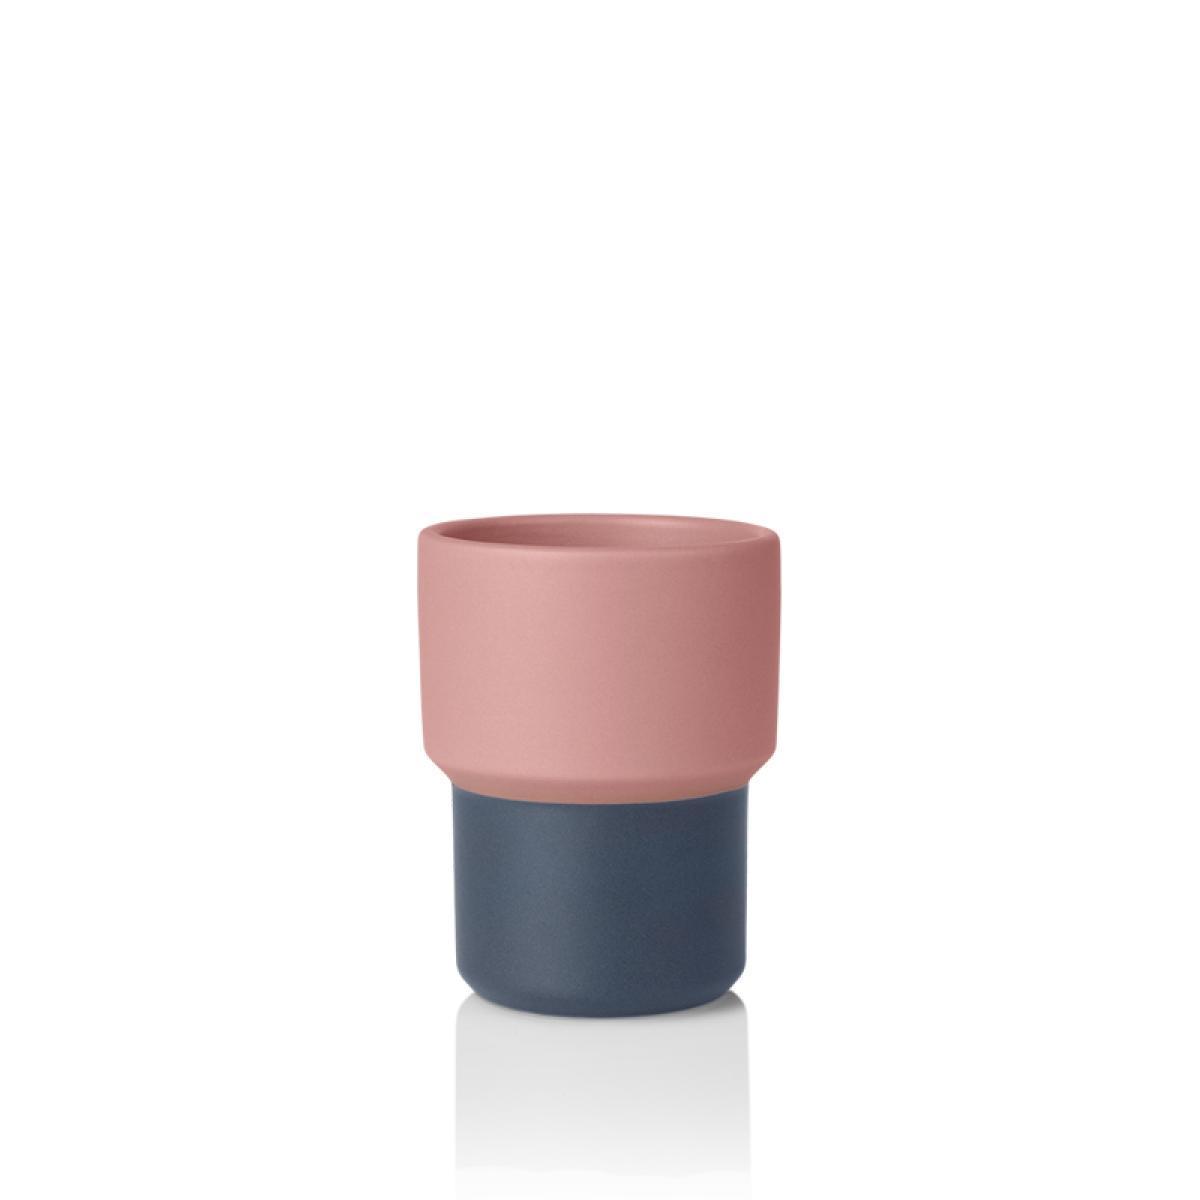 Lucie Kaas Fumario Mug Pink/Dark Grey, 10 cm